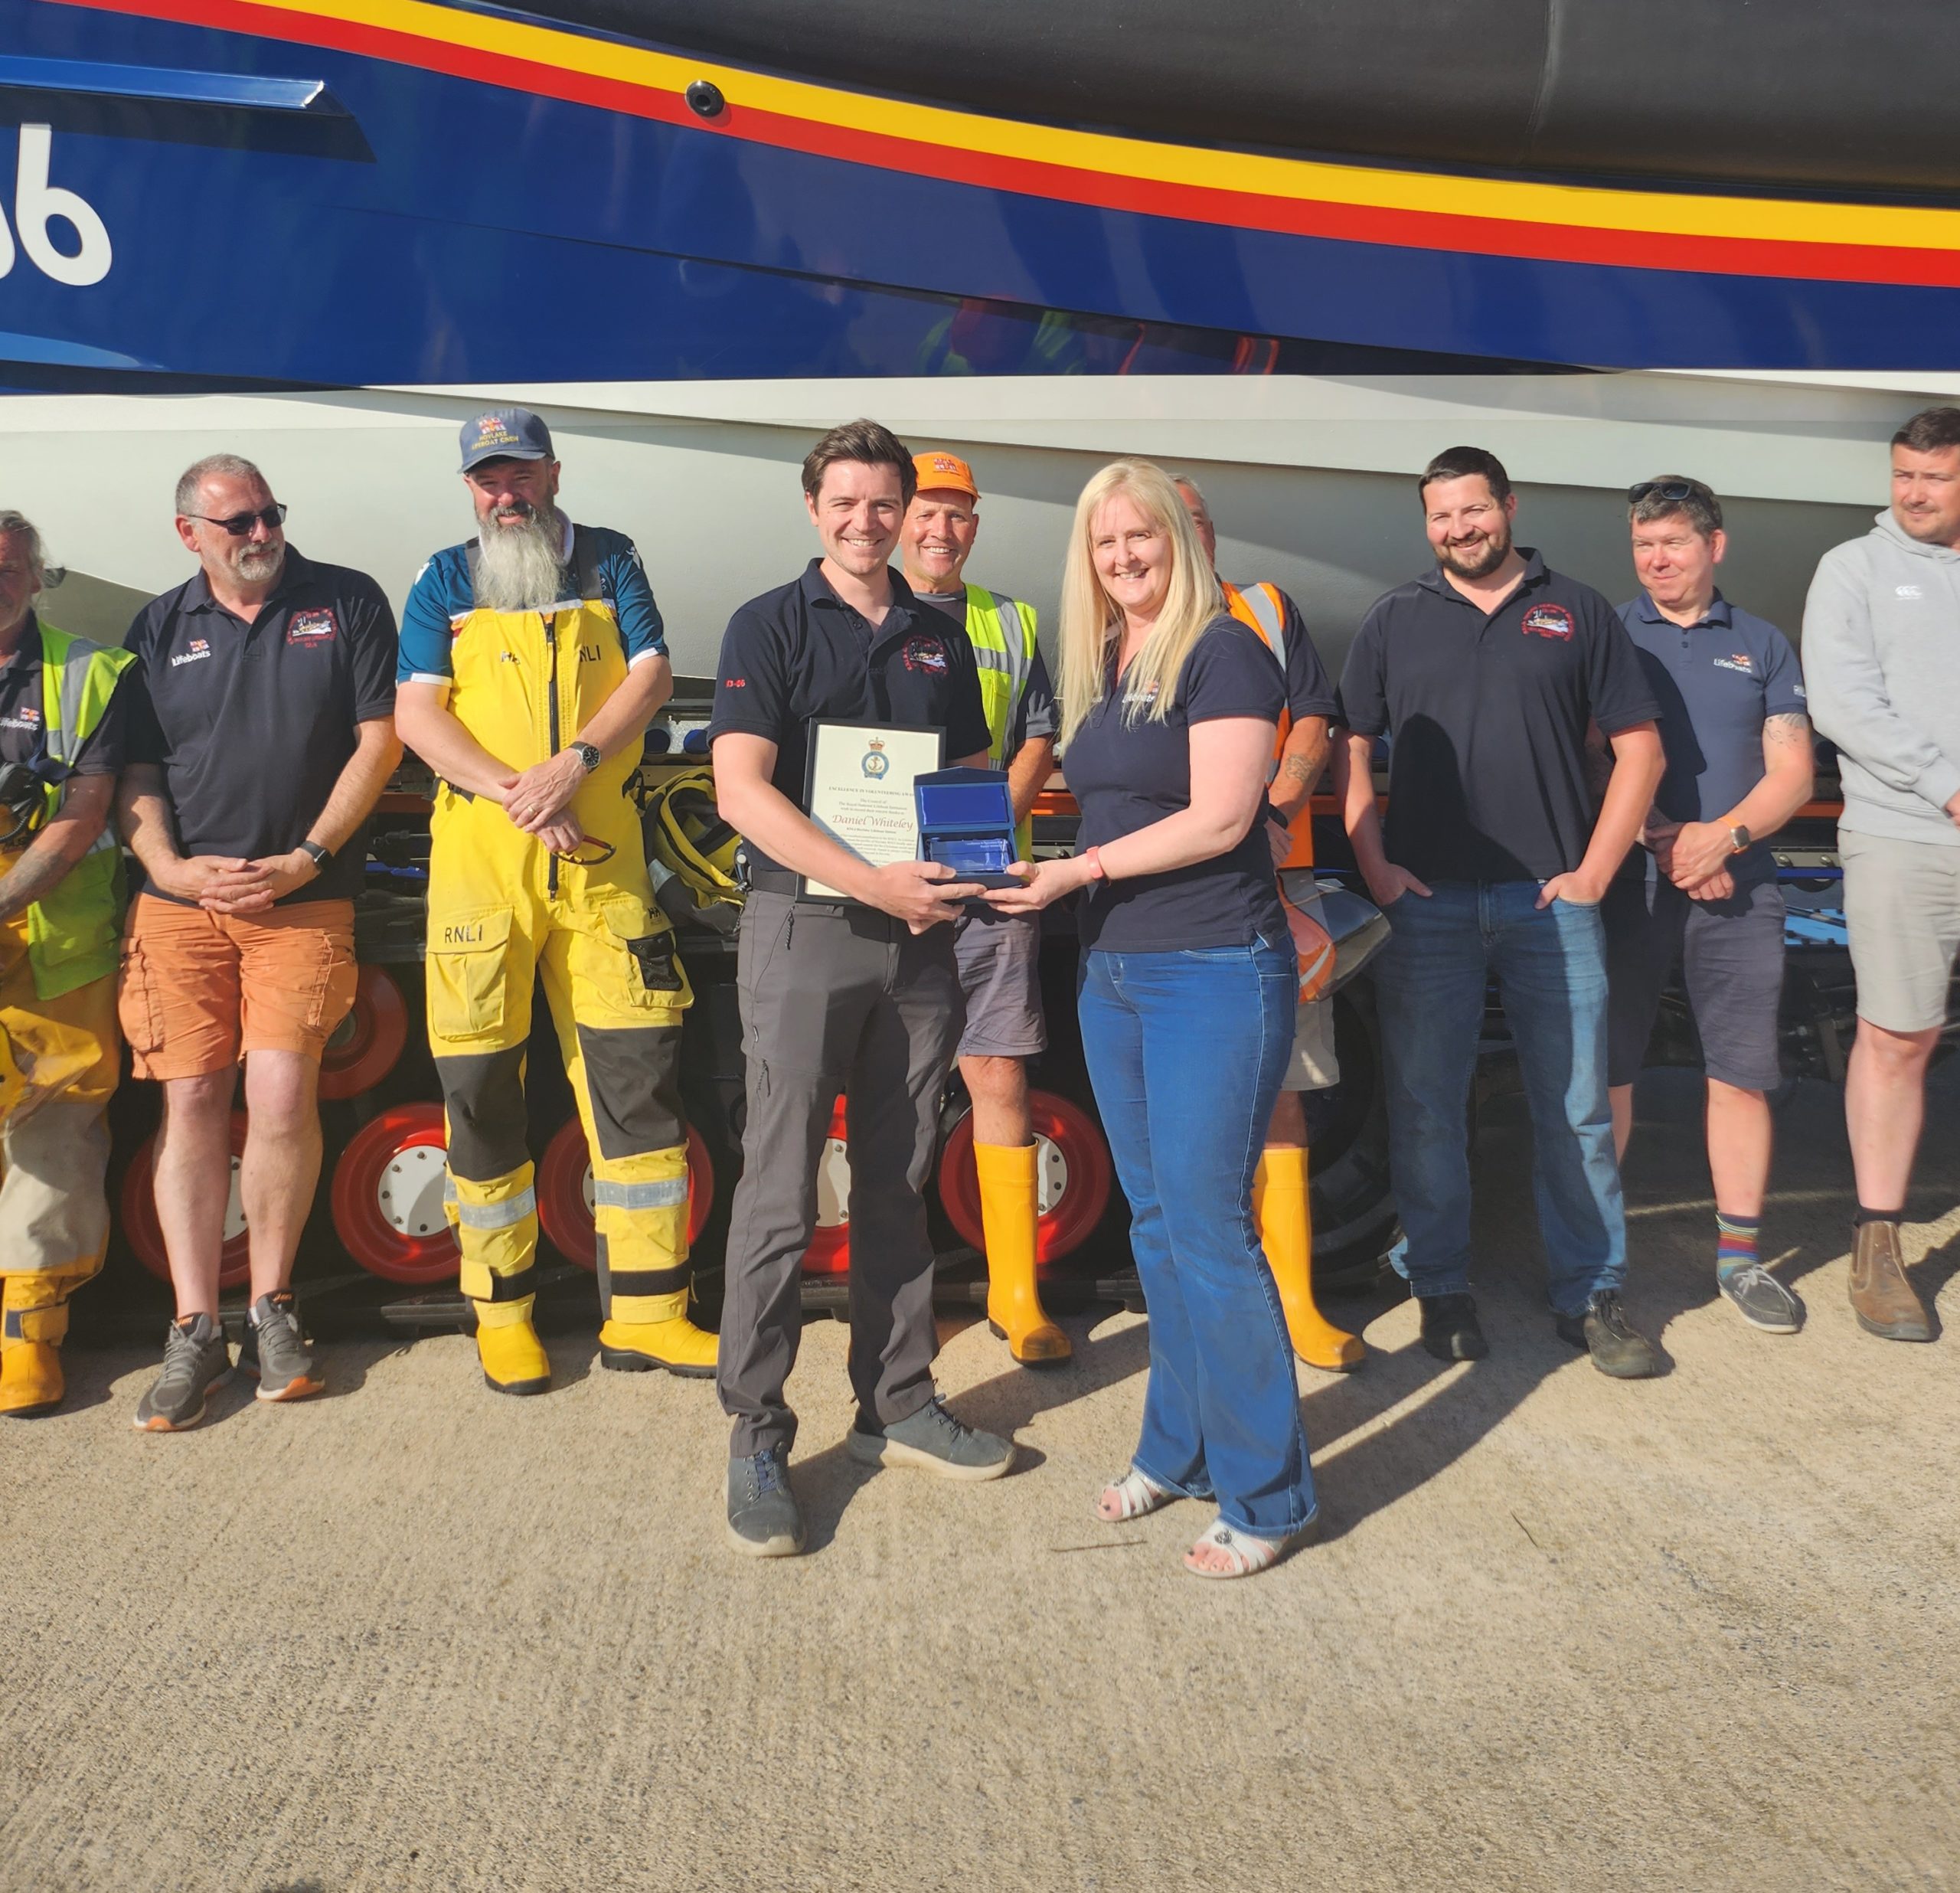 Lifeboat Dan receives award for work promoting Hoylake RNLI